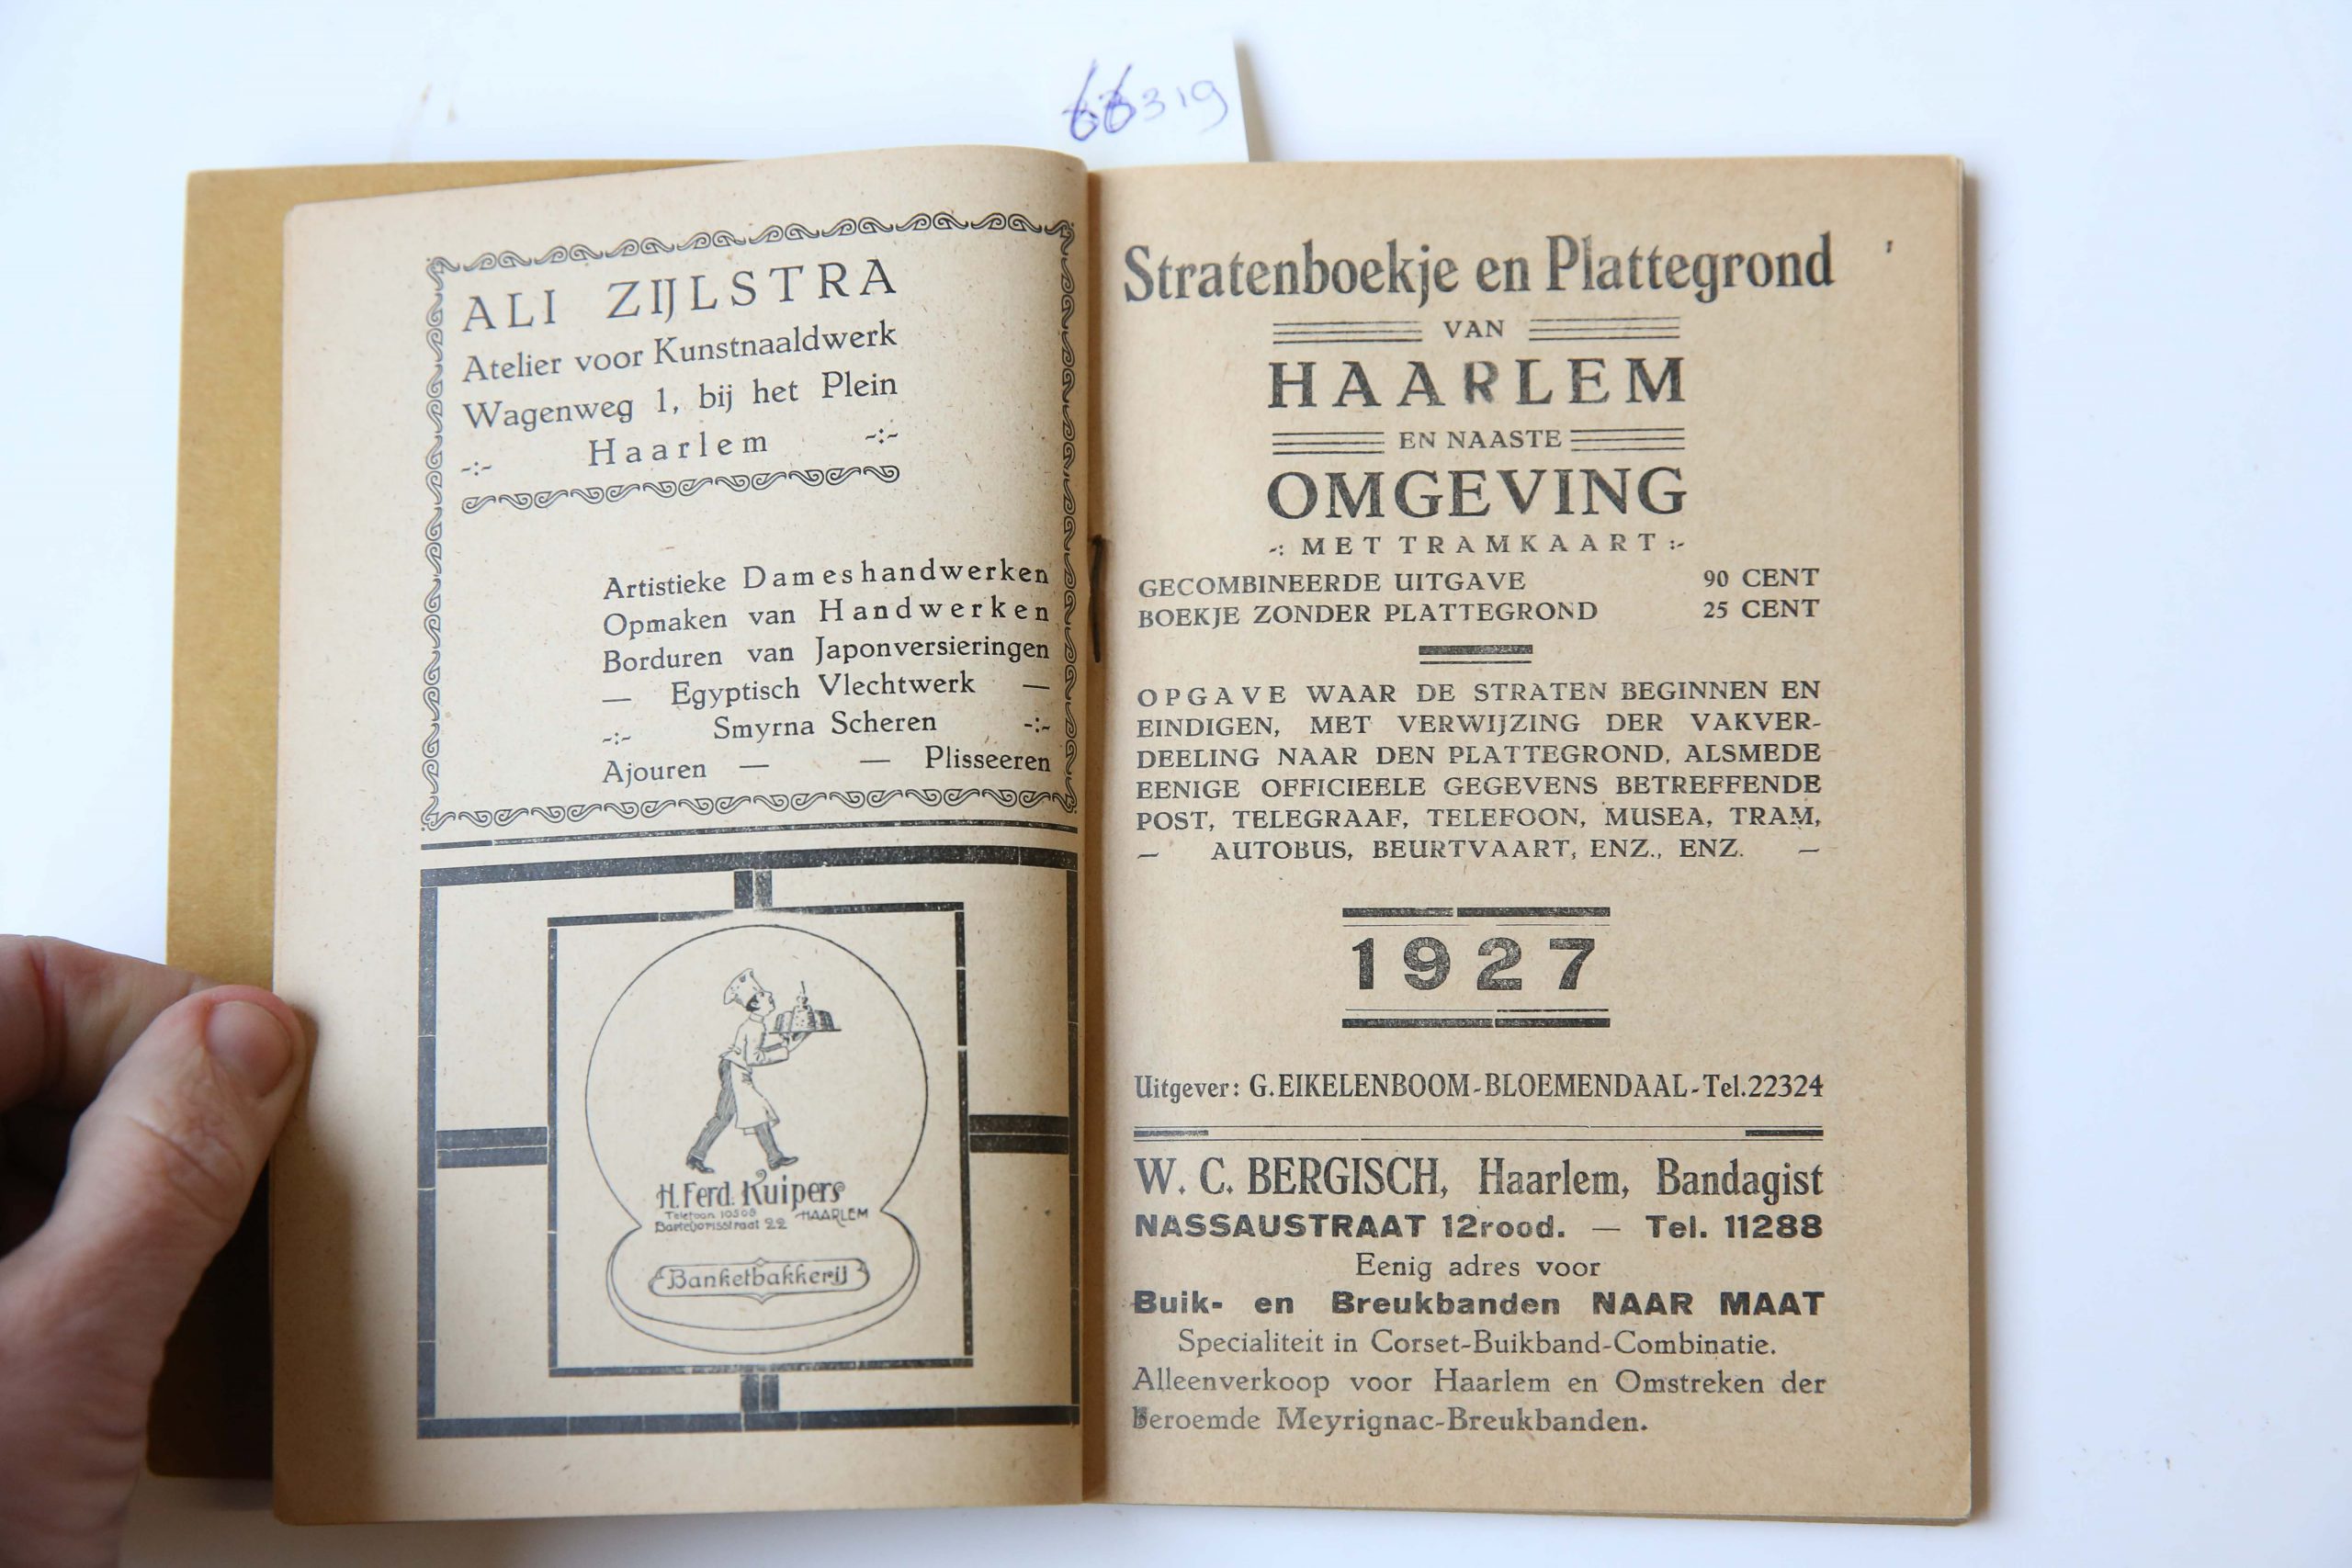 Stratenboekje en Plattegrond van haarlem en Naaste omgeving met Tramkaart, Gids en Wegwijzer, G. Eikelenboom Bloemendaal 1927, 84 pp.